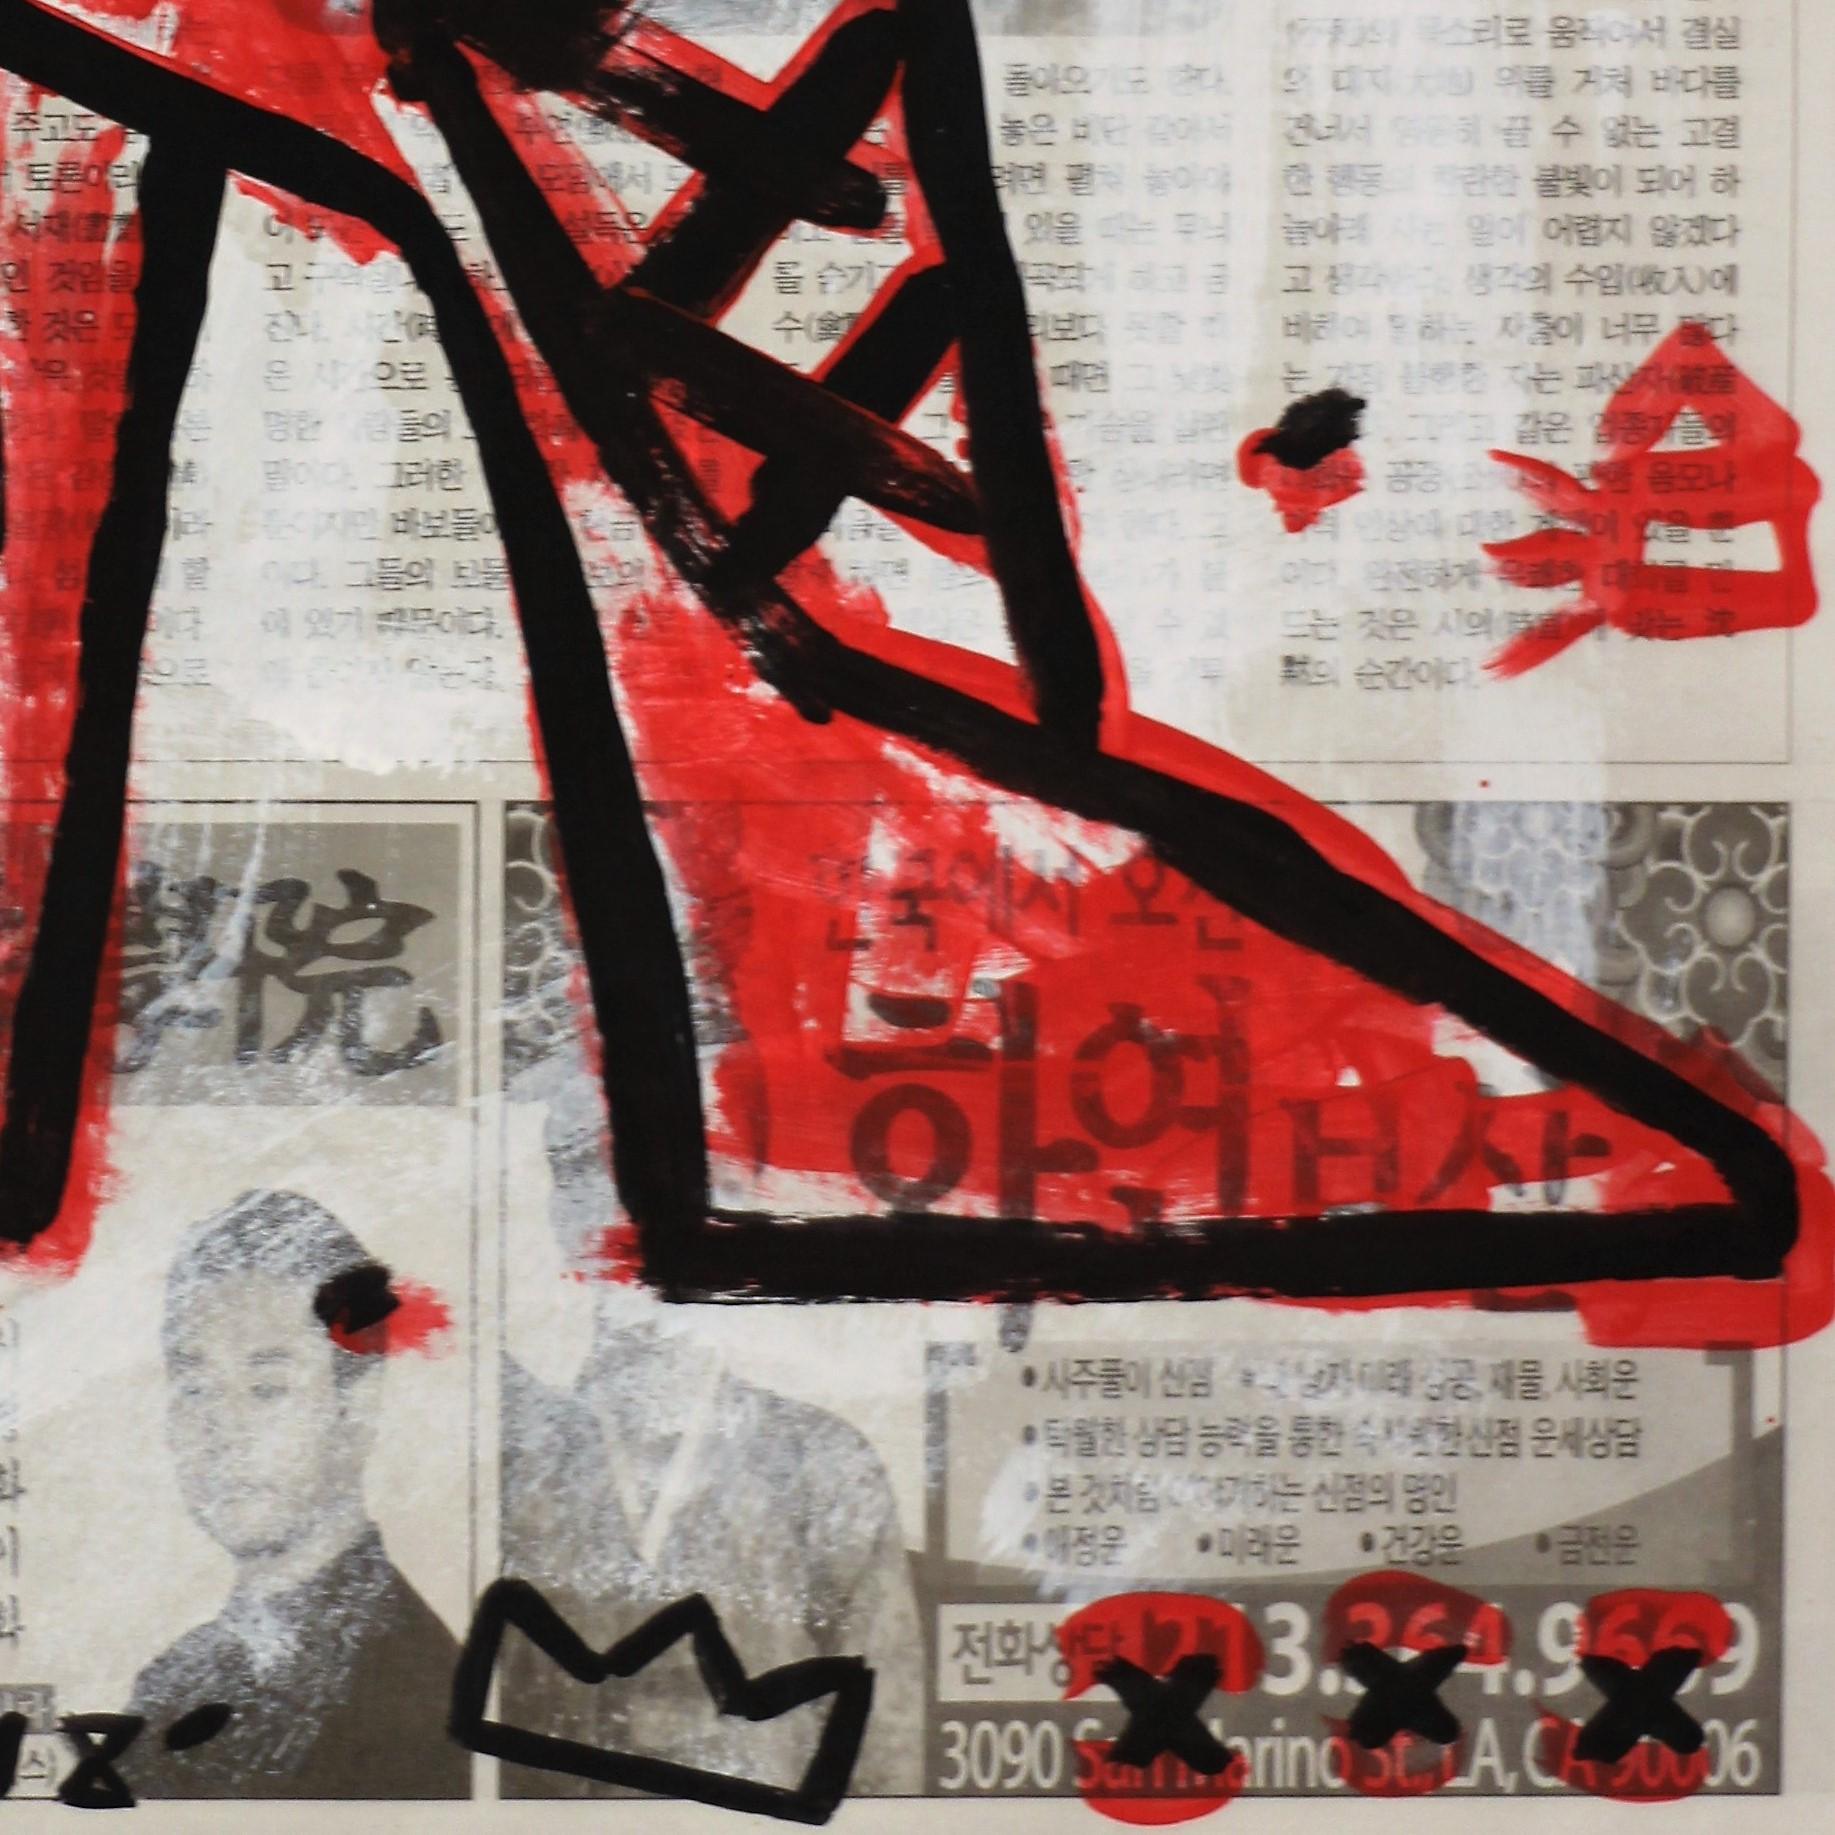 My Dream Shoe - Black and Red Stiletto Original Street Art on Newsprint - Painting by Gary John